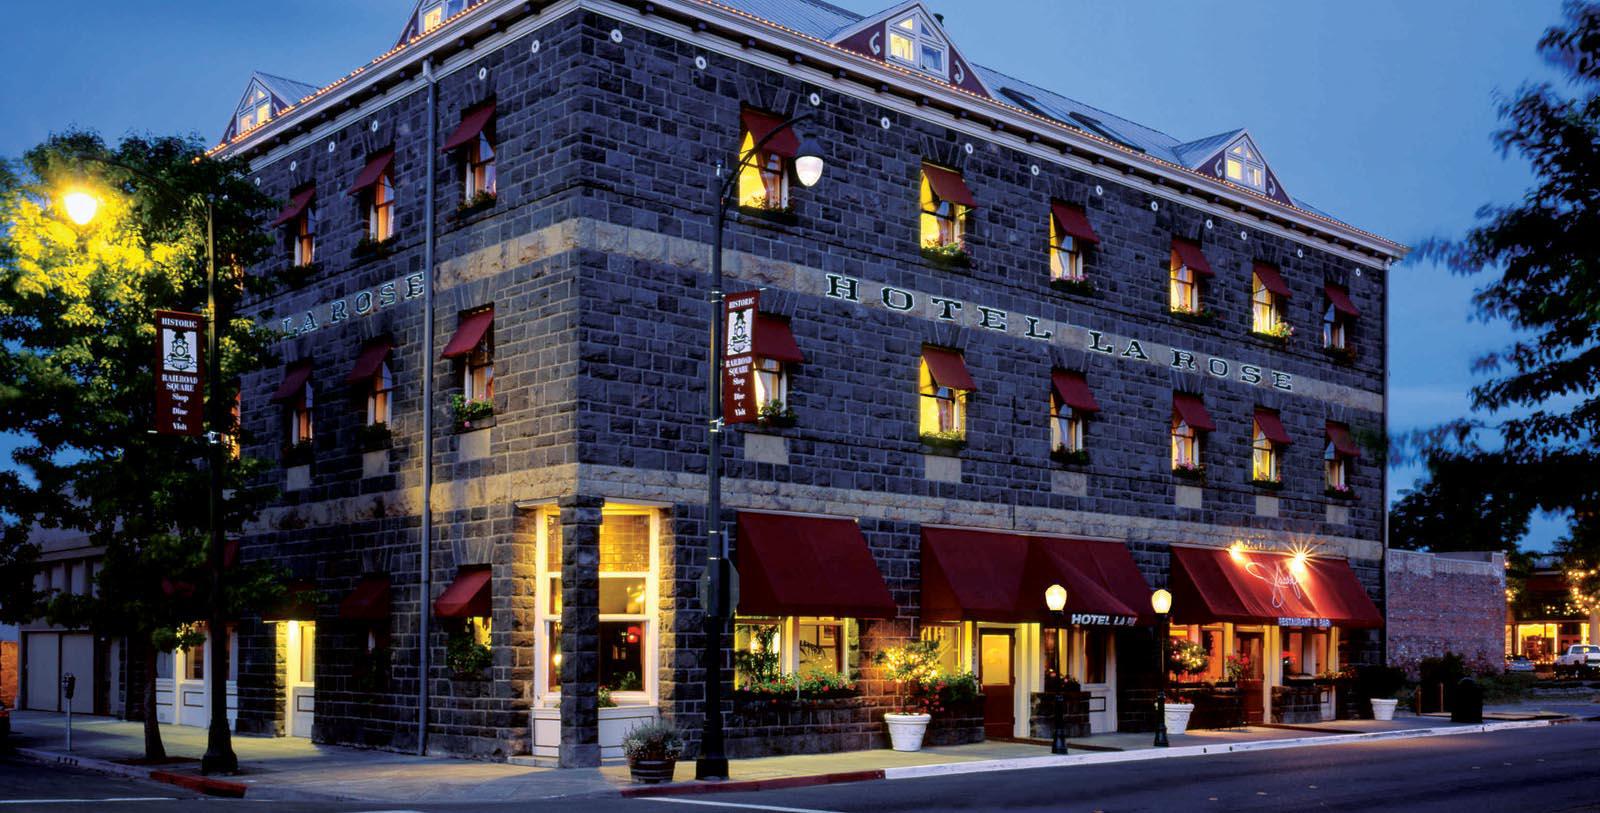 Discover the grand stone façade of the Hotel La Rose.